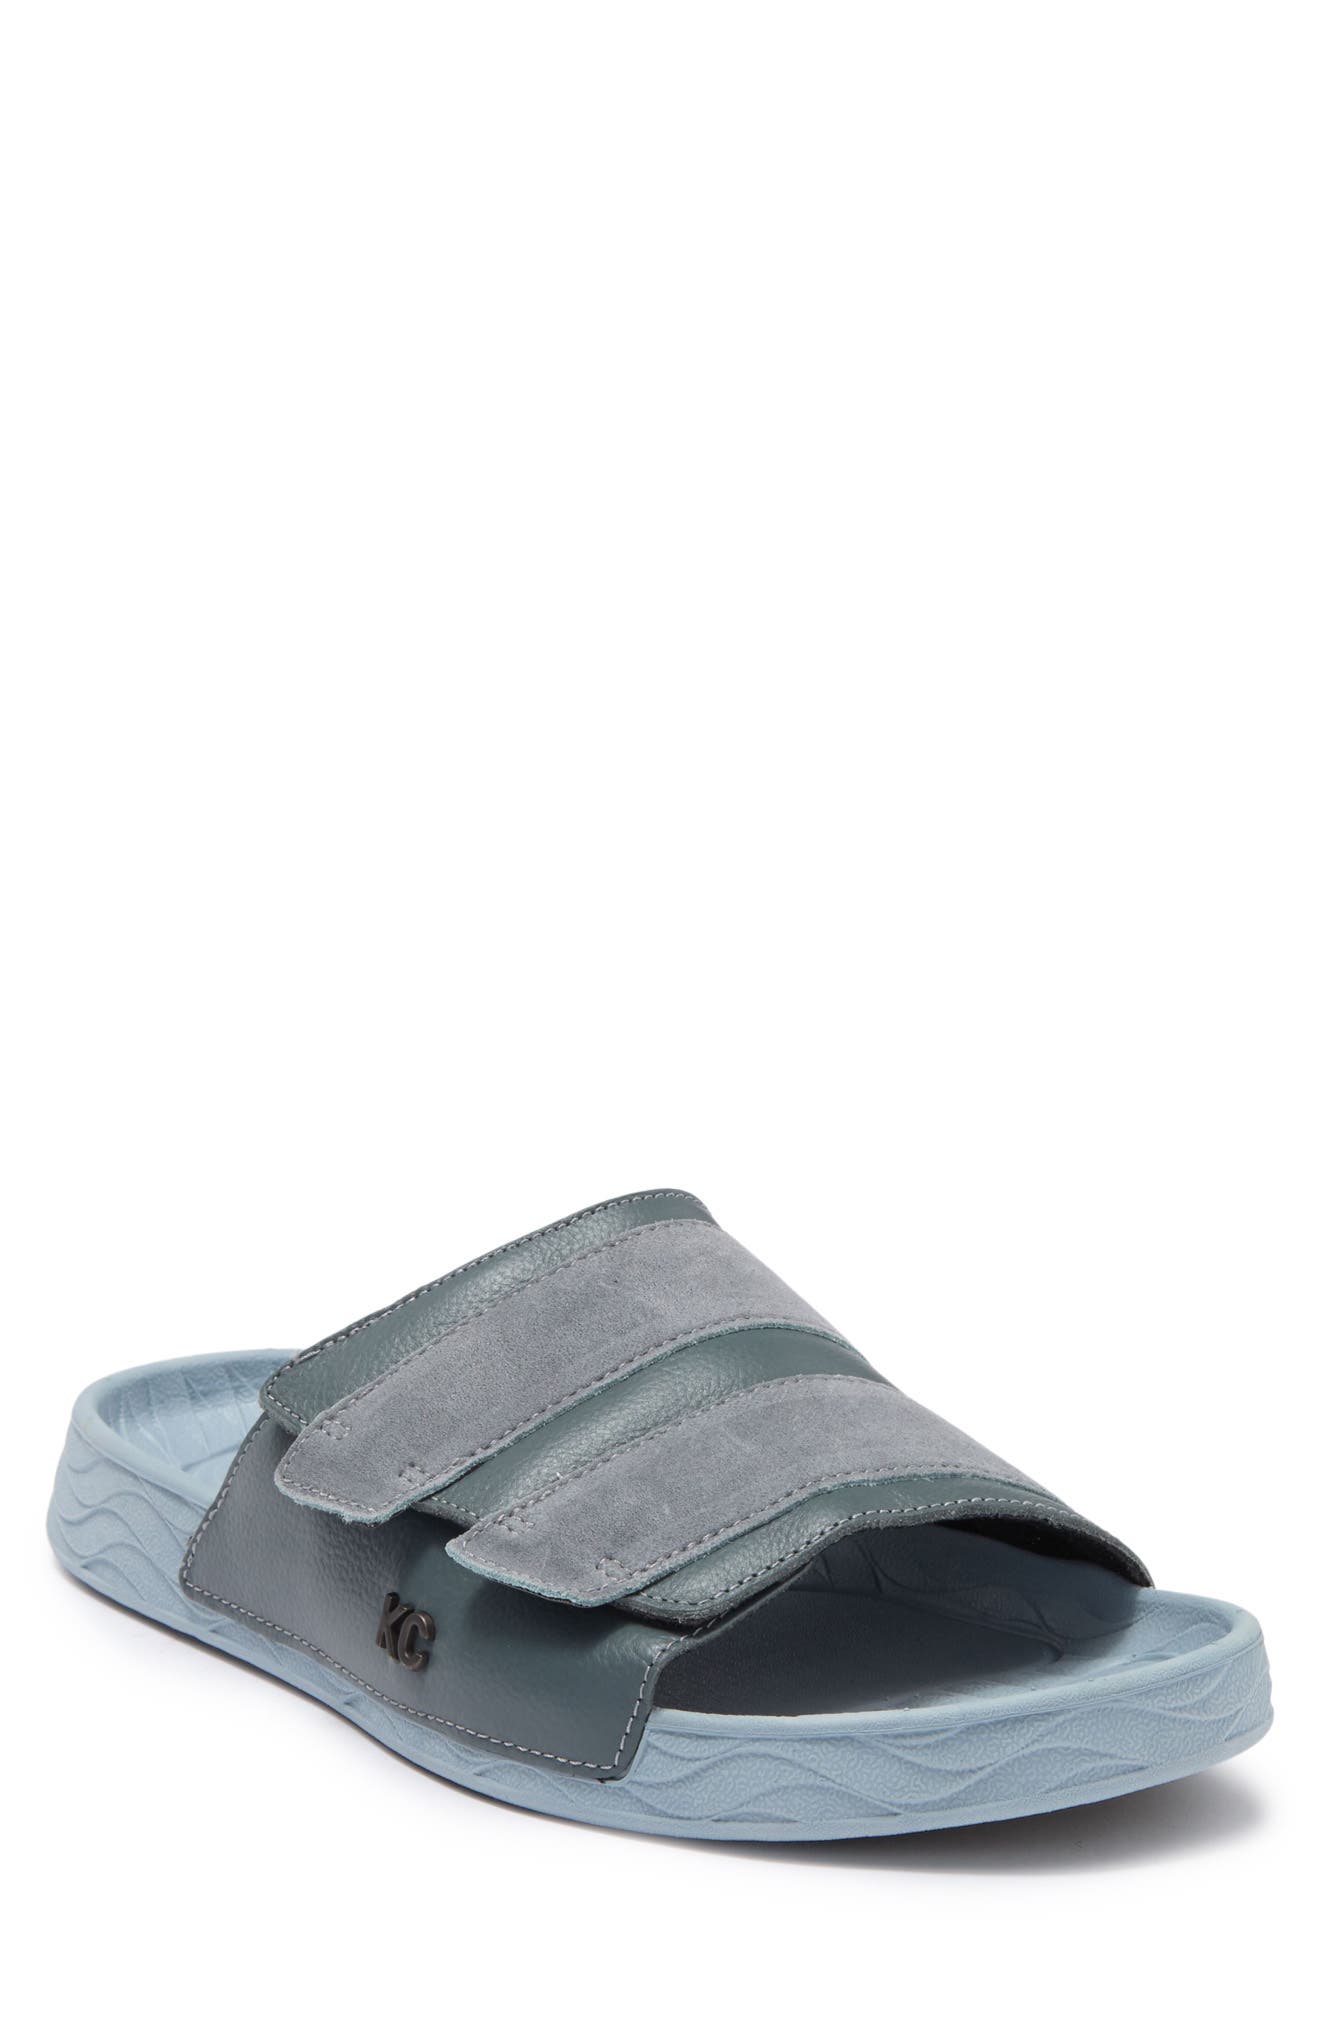 Kenneth Cole New York Nico Slide Sandal In Grey